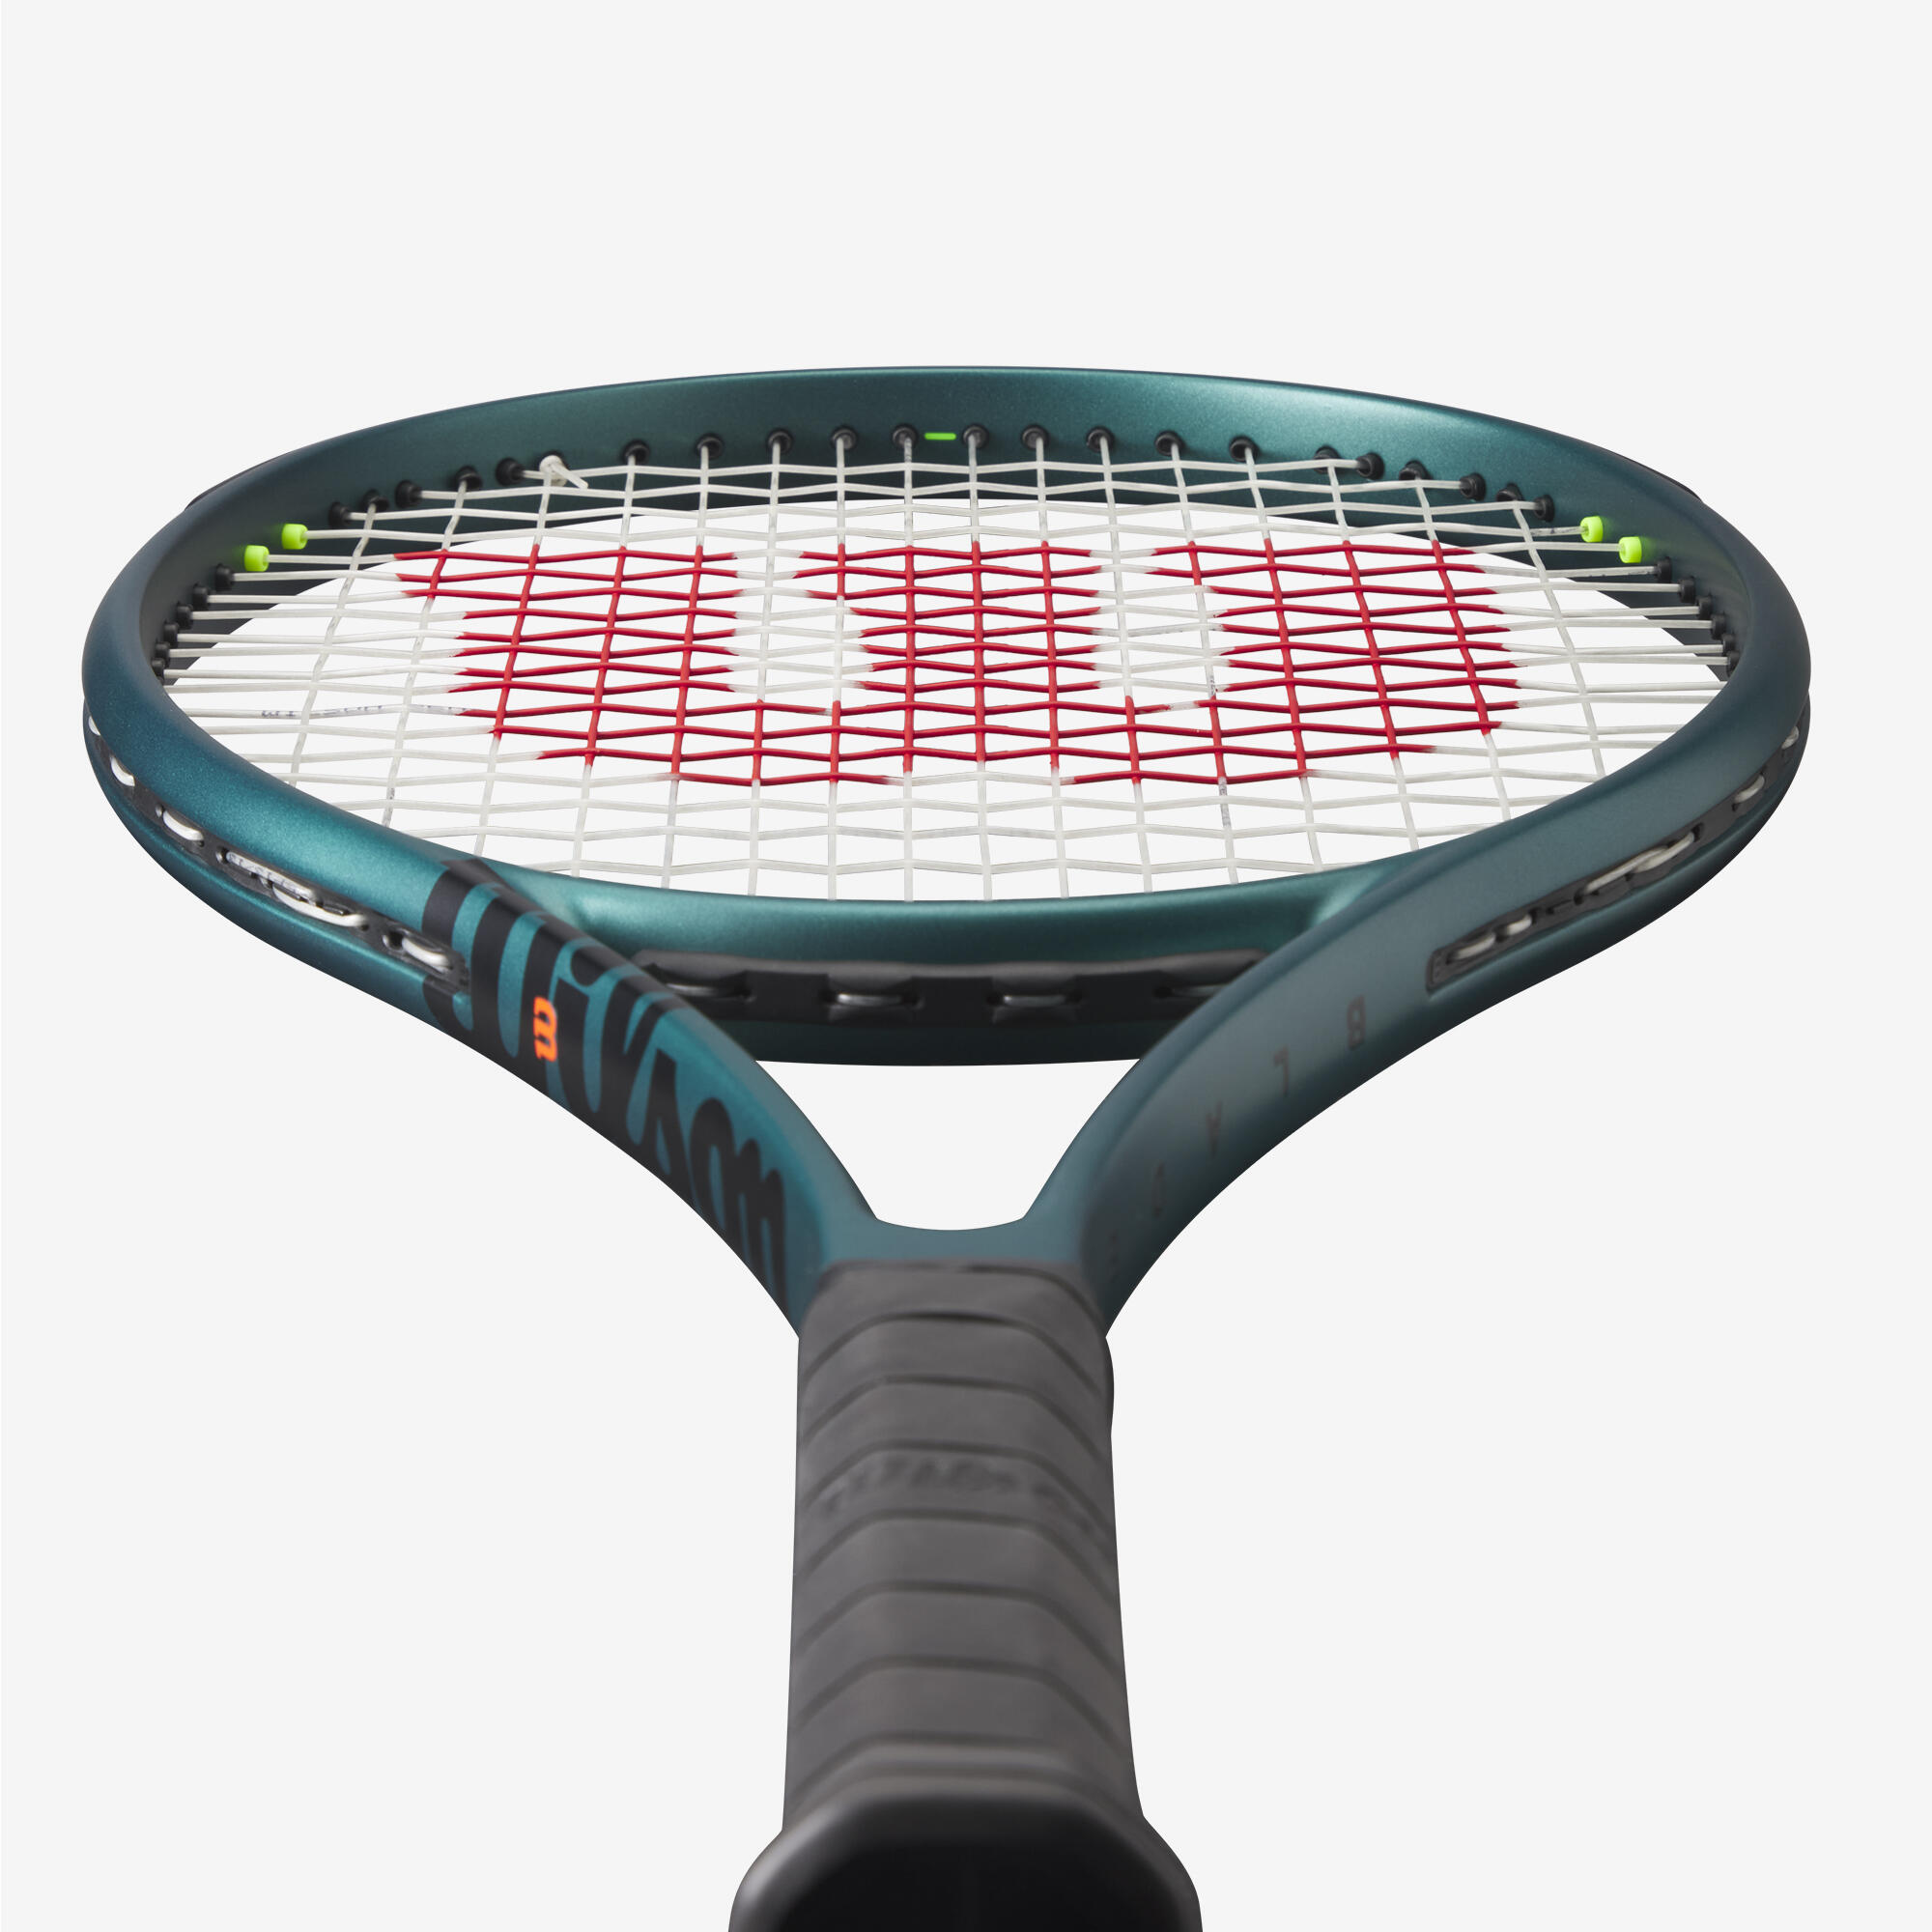 Adult Tennis Racket Blade 101L V9.0 - Green/Black 5/5